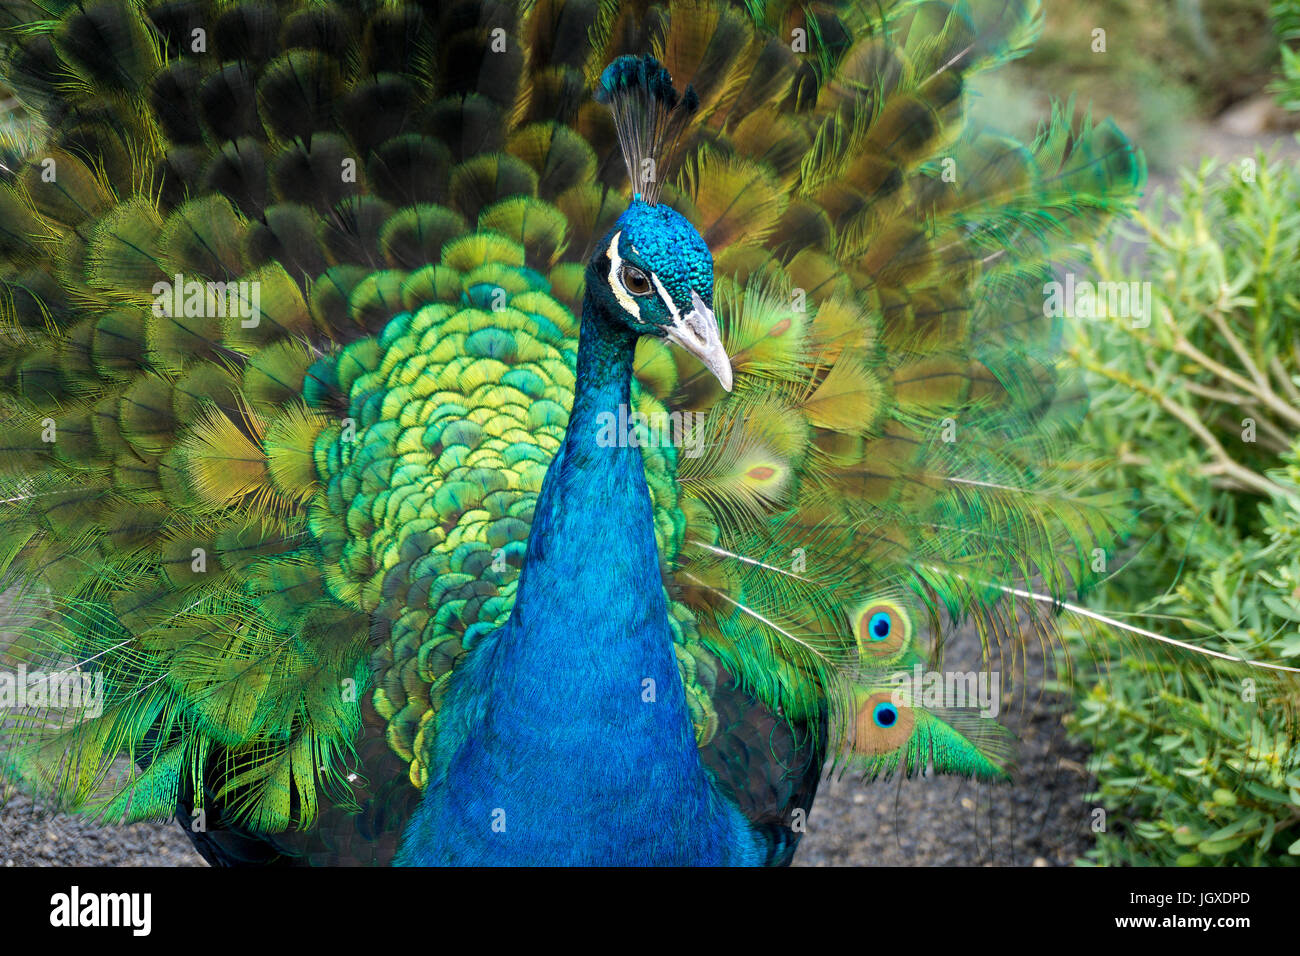 La Dar schlagender blauer pfau (pavo cristatus) im Park pardela, las pardelas, Lanzarote, kanarische inseln, europa | blue Peacock (pavo cristatus) à pa Banque D'Images